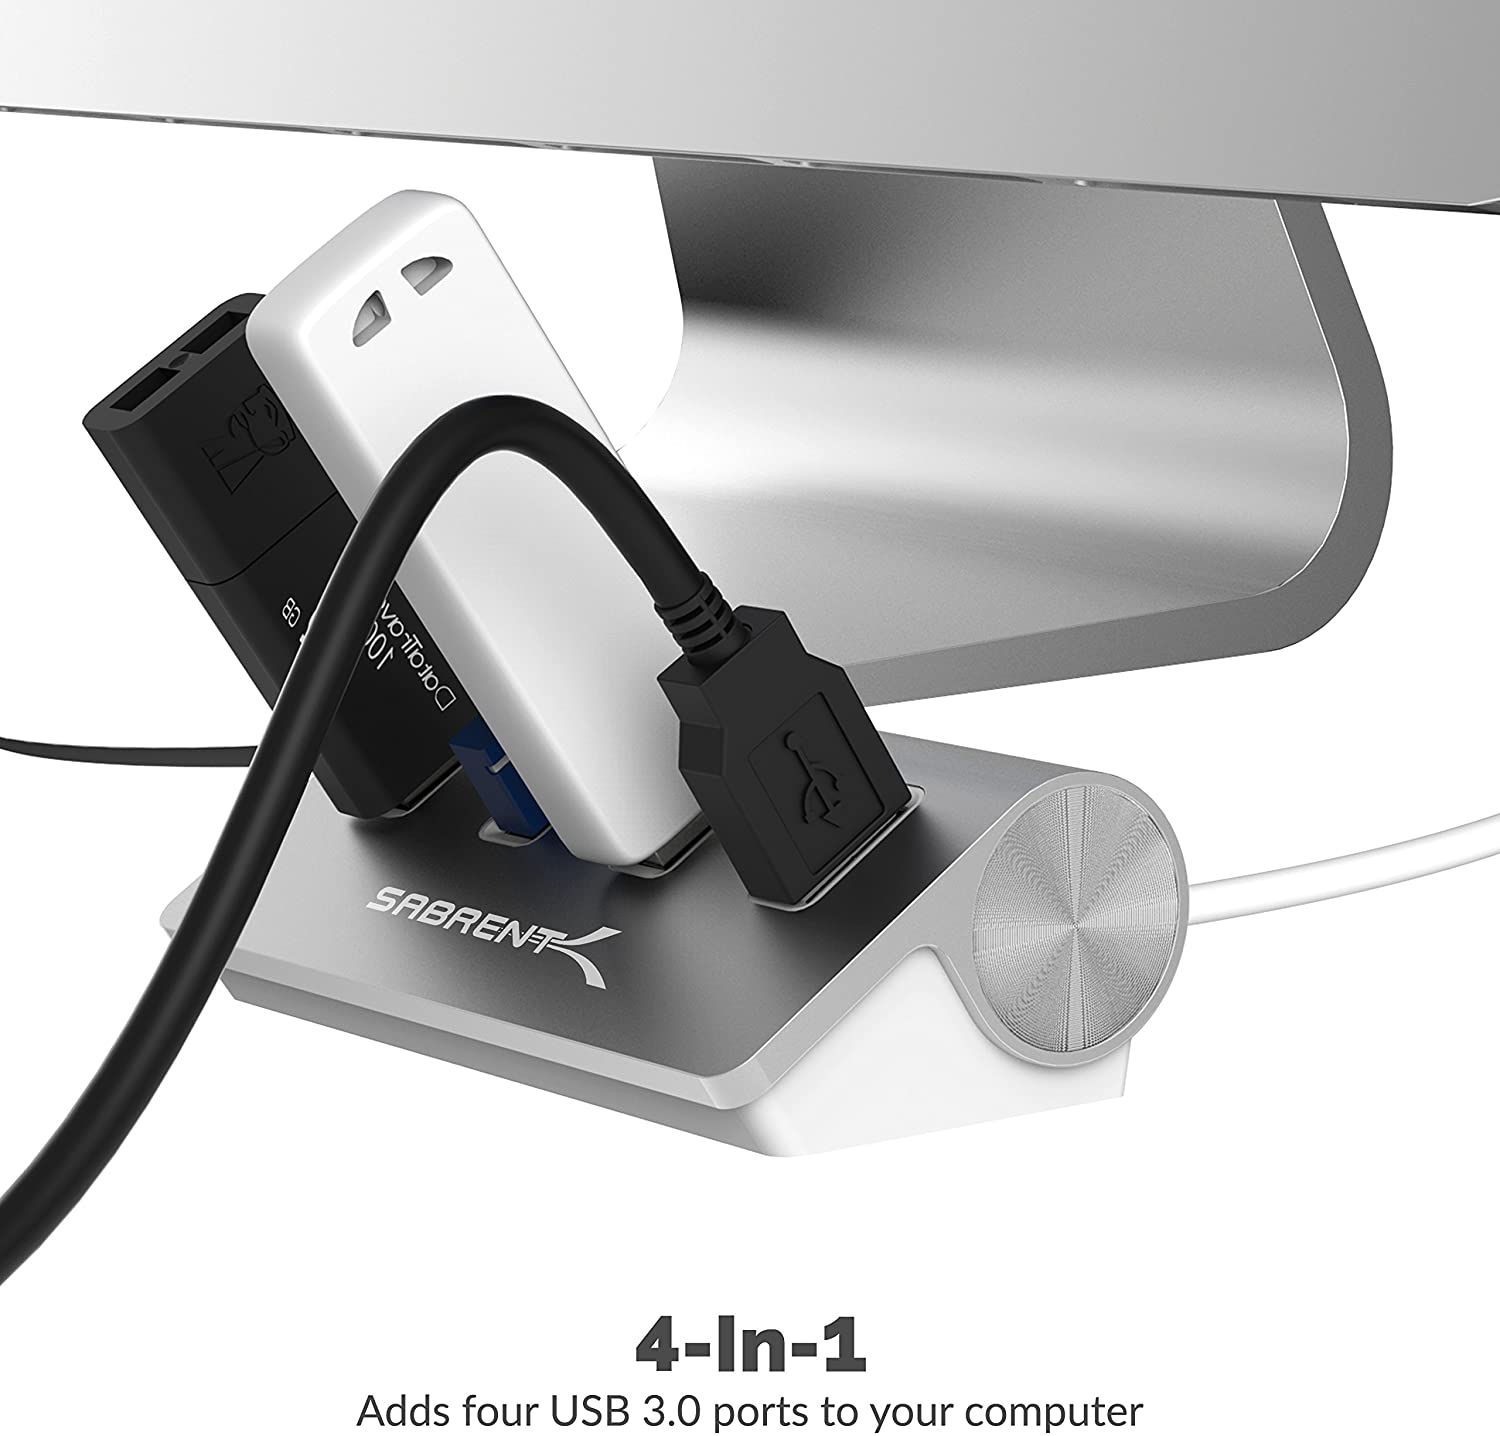 SABRENT 4 Port USB 3.0 Hub Unibody Aluminum Portable Data Hub with 2.5ft USB 3.0 Cable for iMac, MacBook, MacBook Pro, MacBook Air, Mac Mini, or Any PC [Silver] (HB-MAC3)